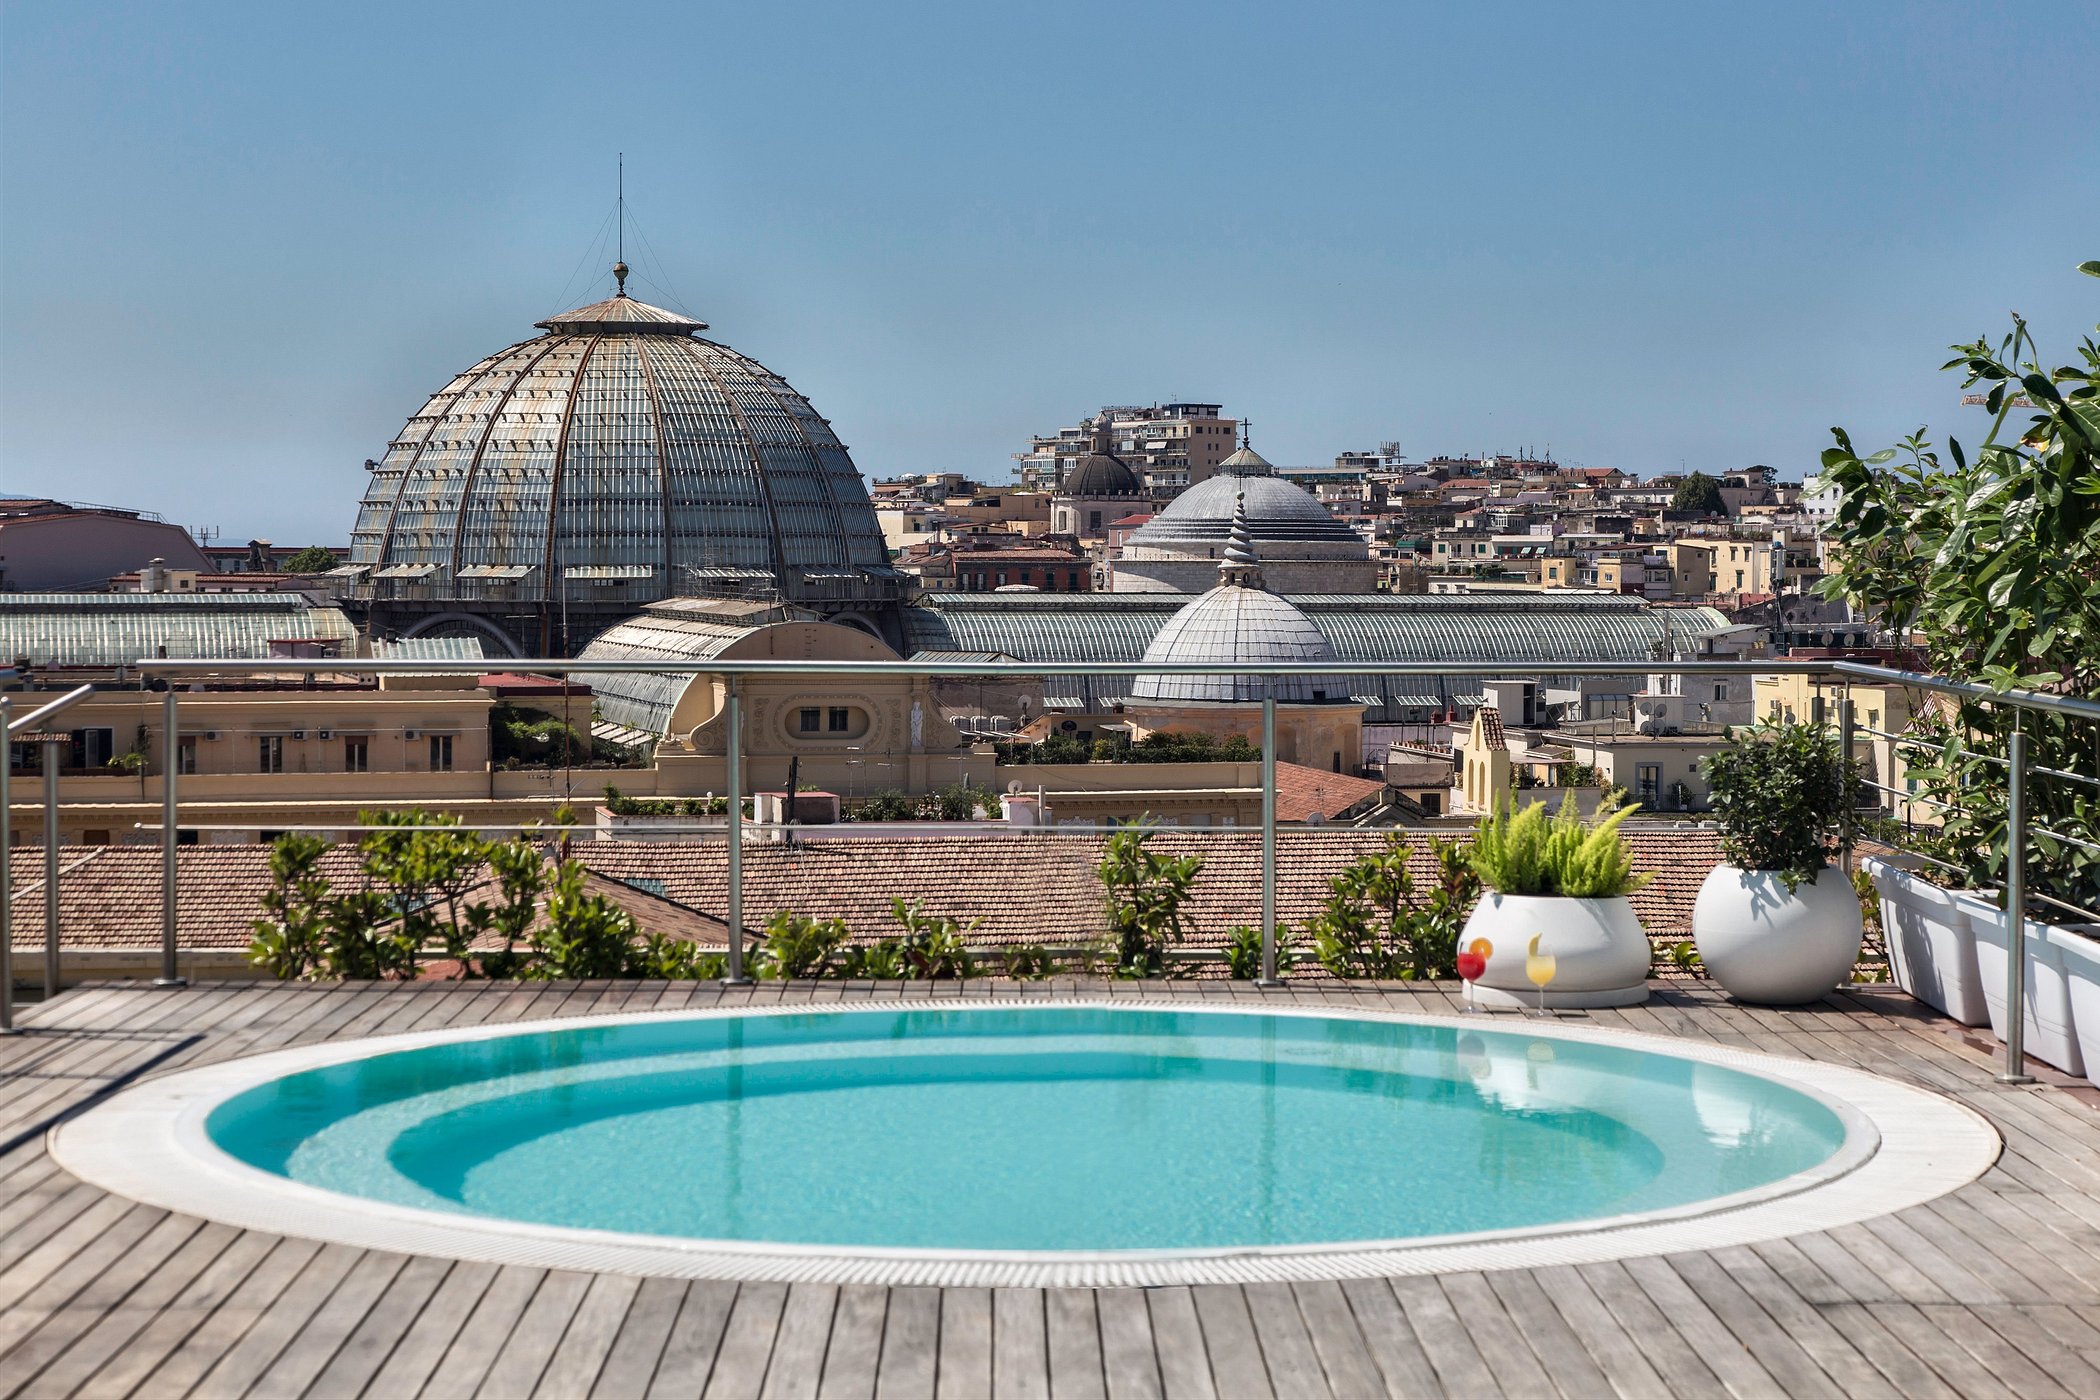 Renaissance Naples Hotel Mediterraneo image